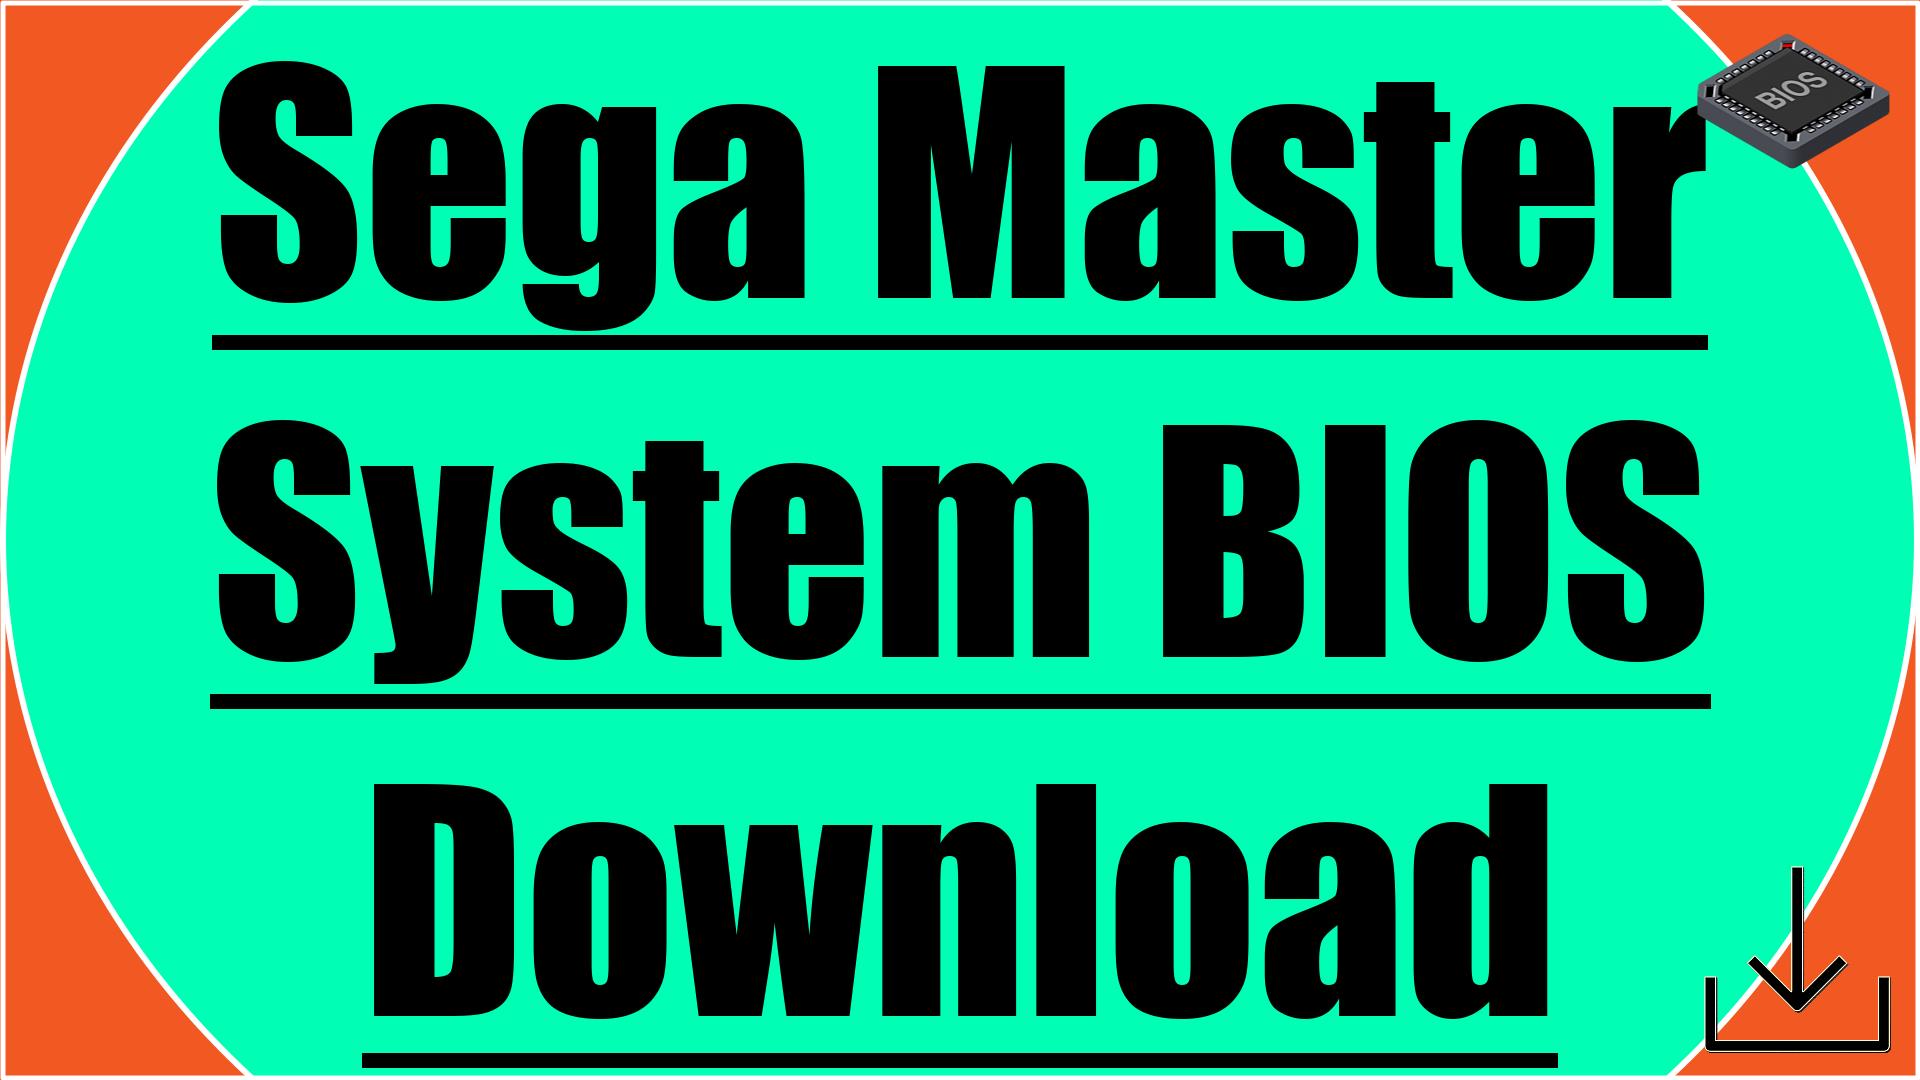 Sega Master System BIOS Download